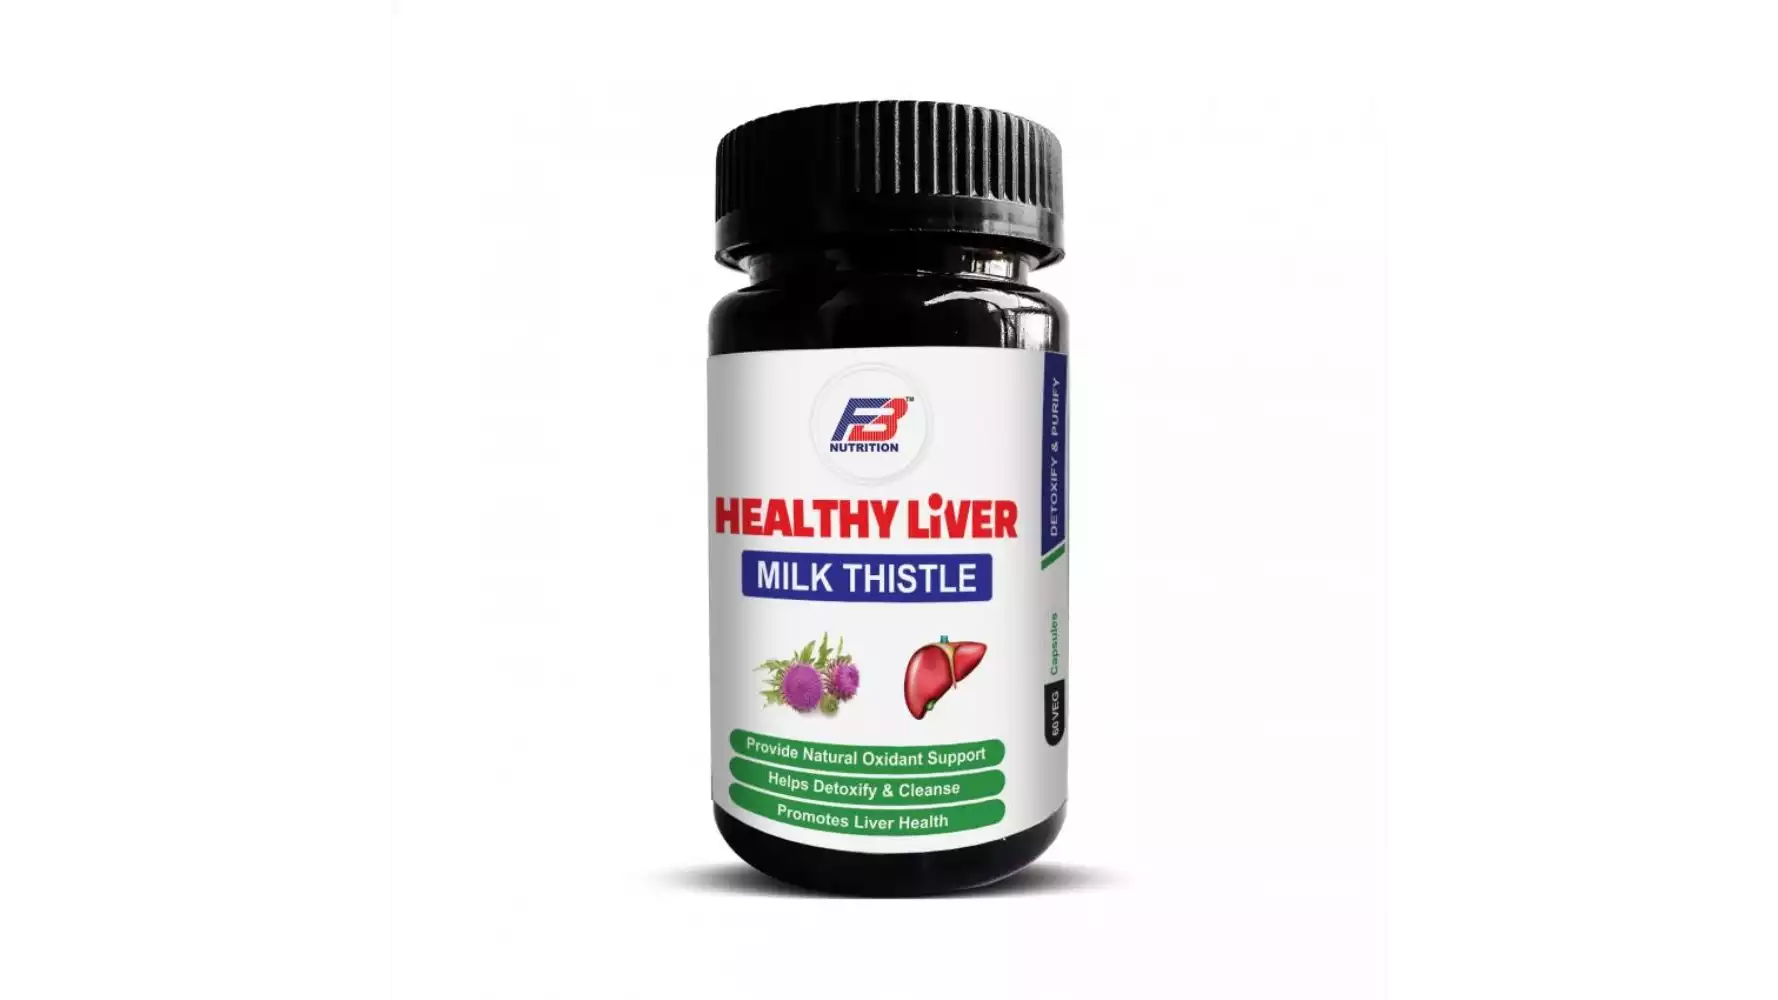 FB Nutrition Healthy Liver (Milk Thistle) (60caps)